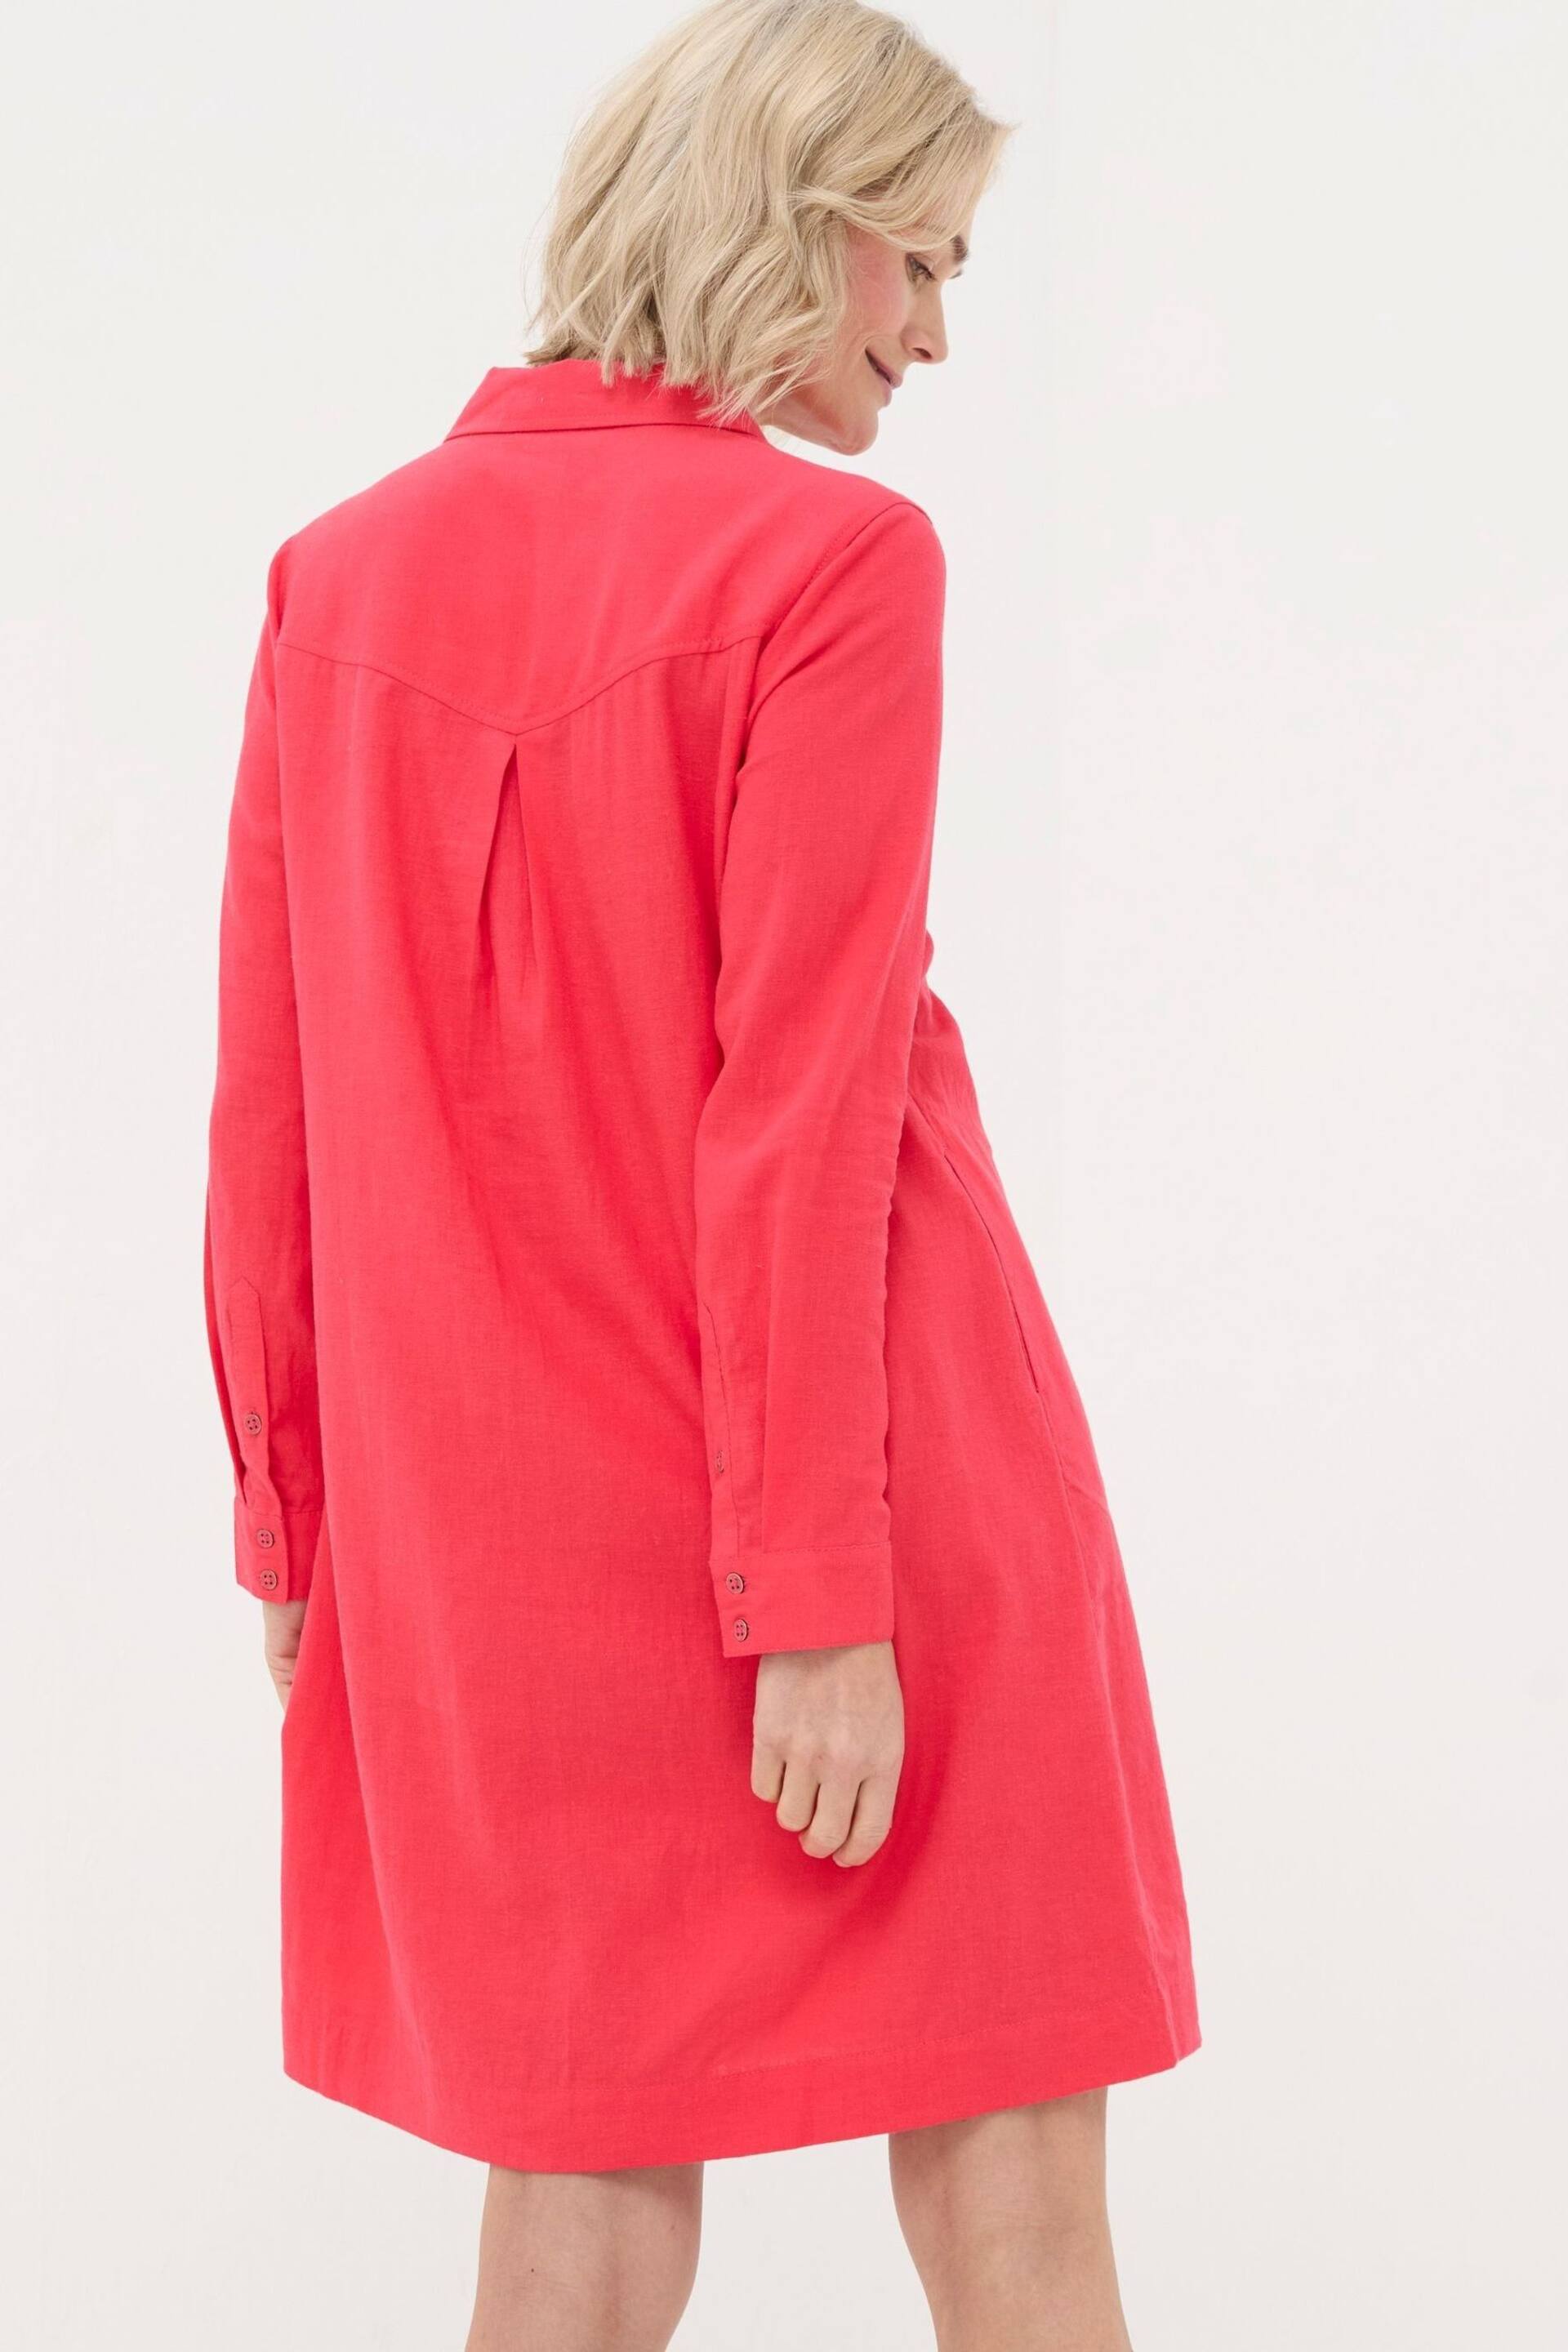 FatFace Red Linen Blend Tunic Dress - Image 2 of 4